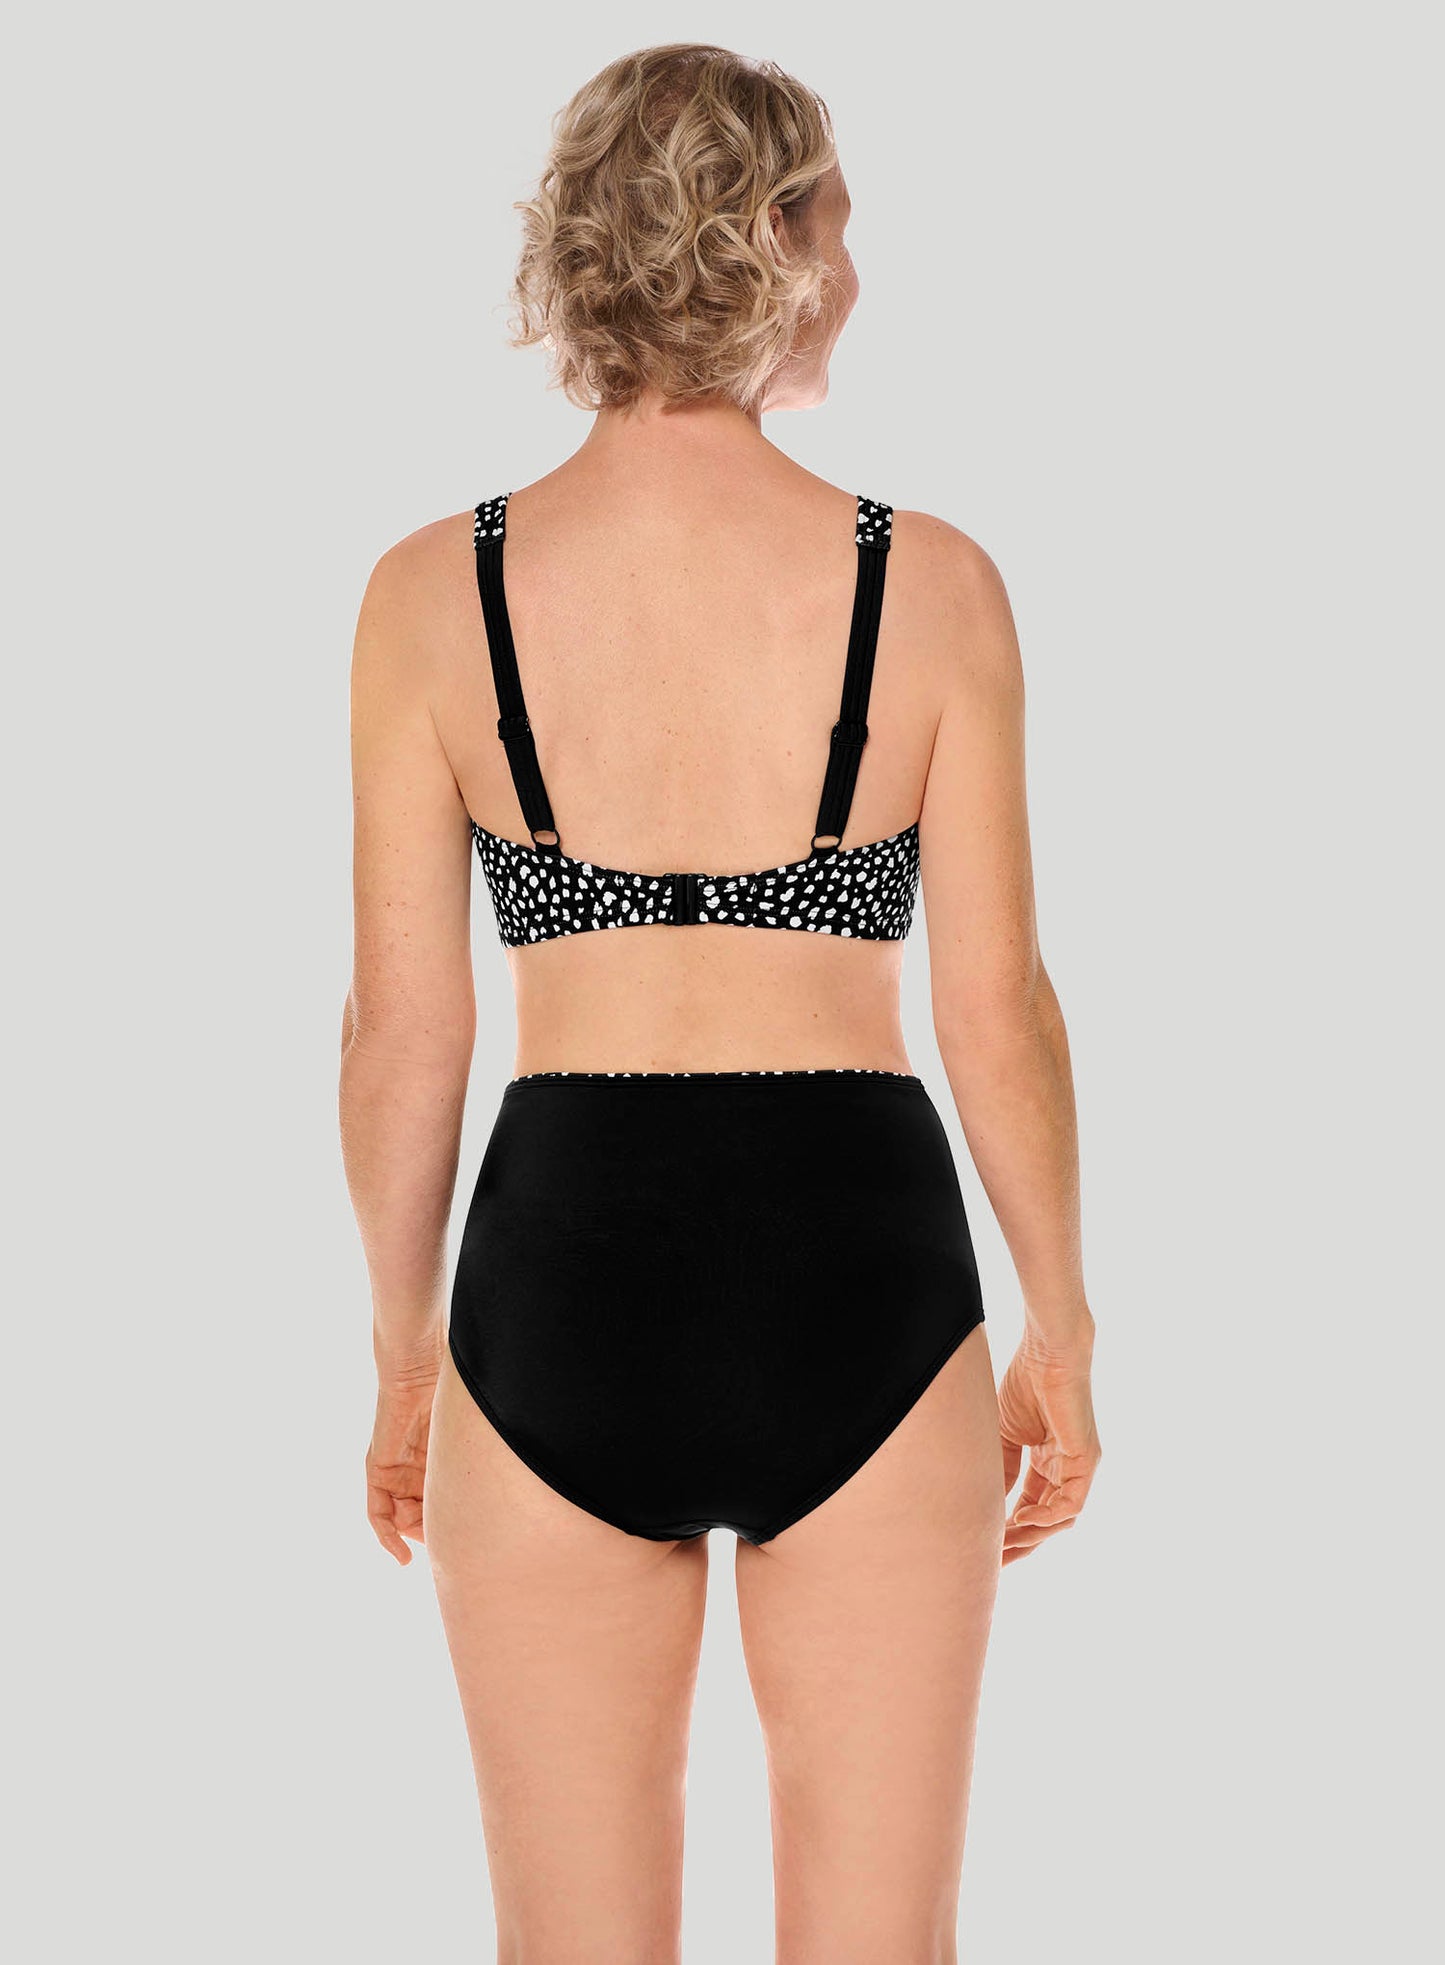 Wholesale 8size Large Black White Skin Sponge Bra Swimsuit Bikini